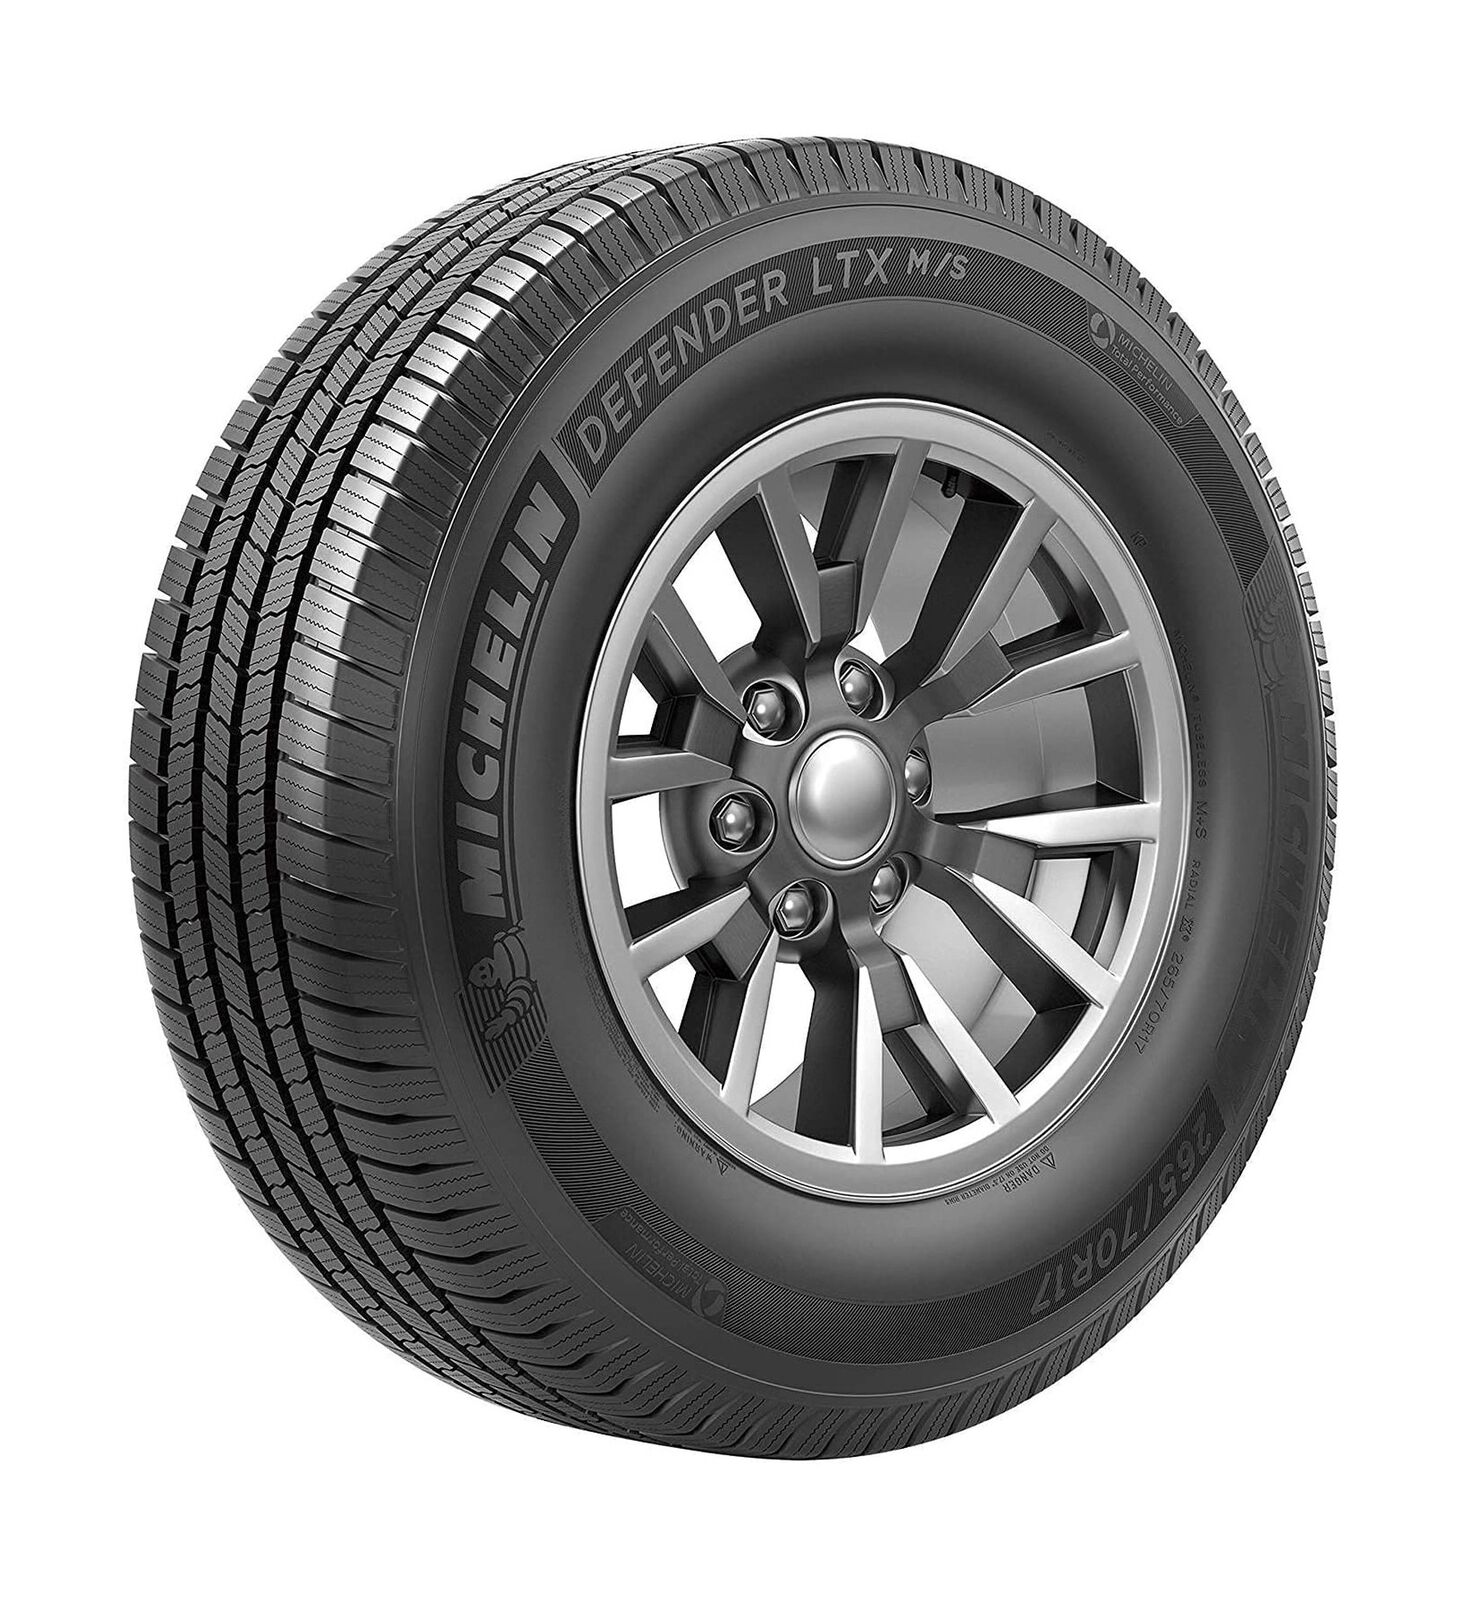 MICHELIN Defender LTX M/S All-Season Radial Car Tire for Light Trucks, SUVs a...